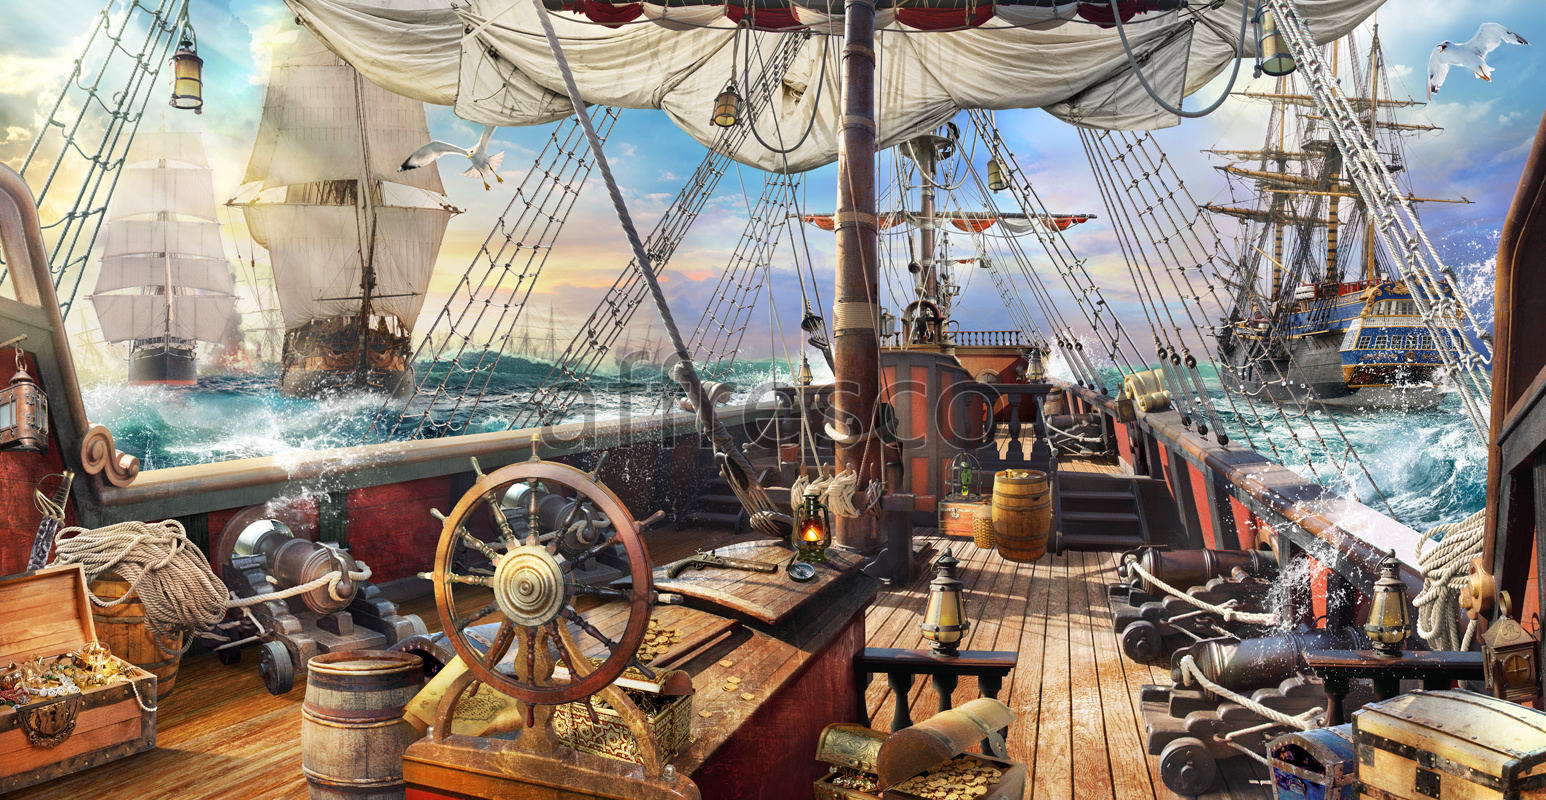 6418 | The best landscapes | deck of a pirate ship | Affresco Factory